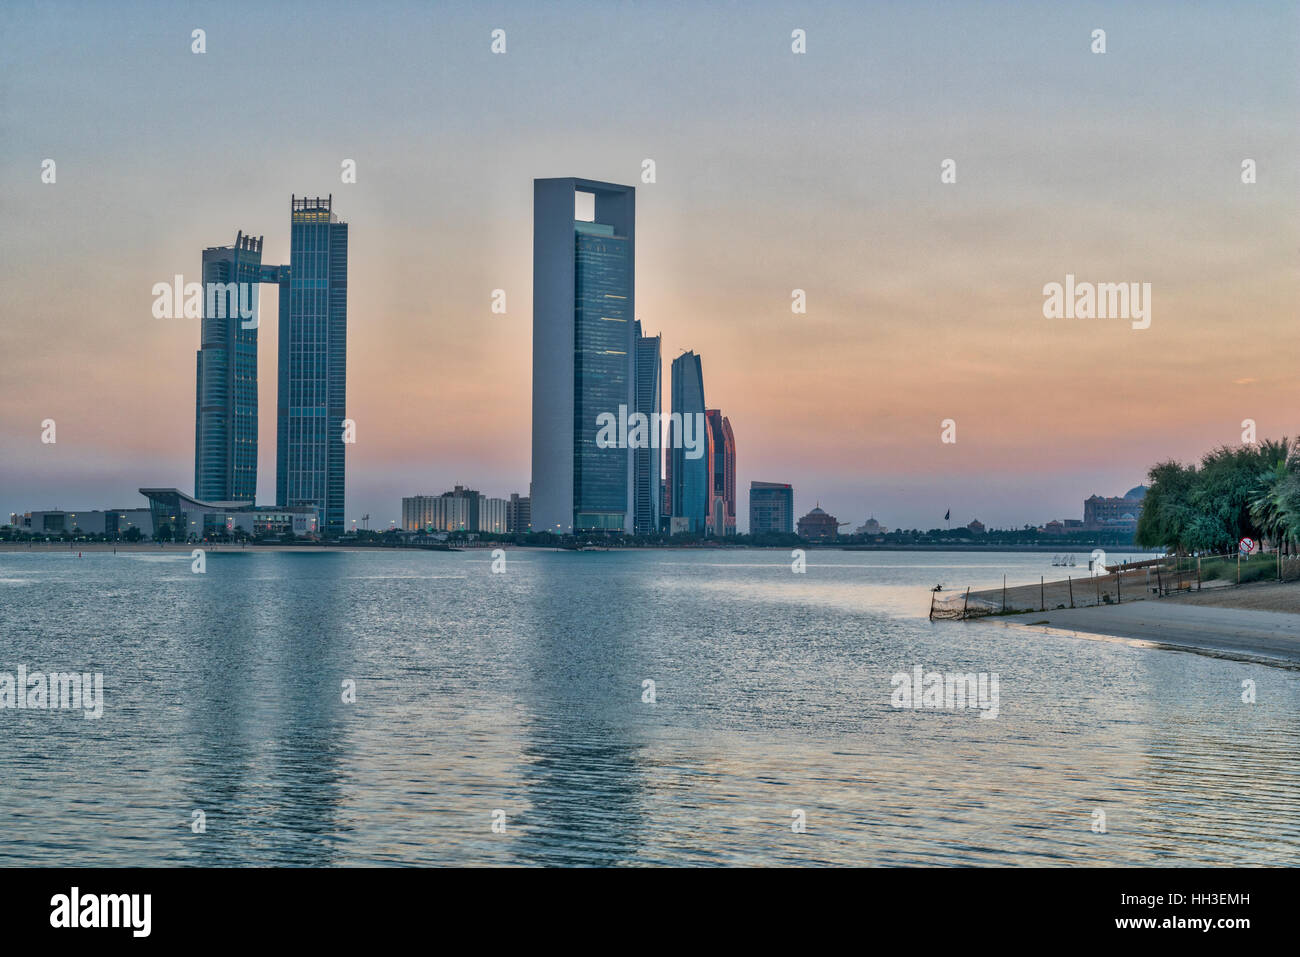 Abu Dhabi Corniche Sunset Dusk Over The Coastline And The